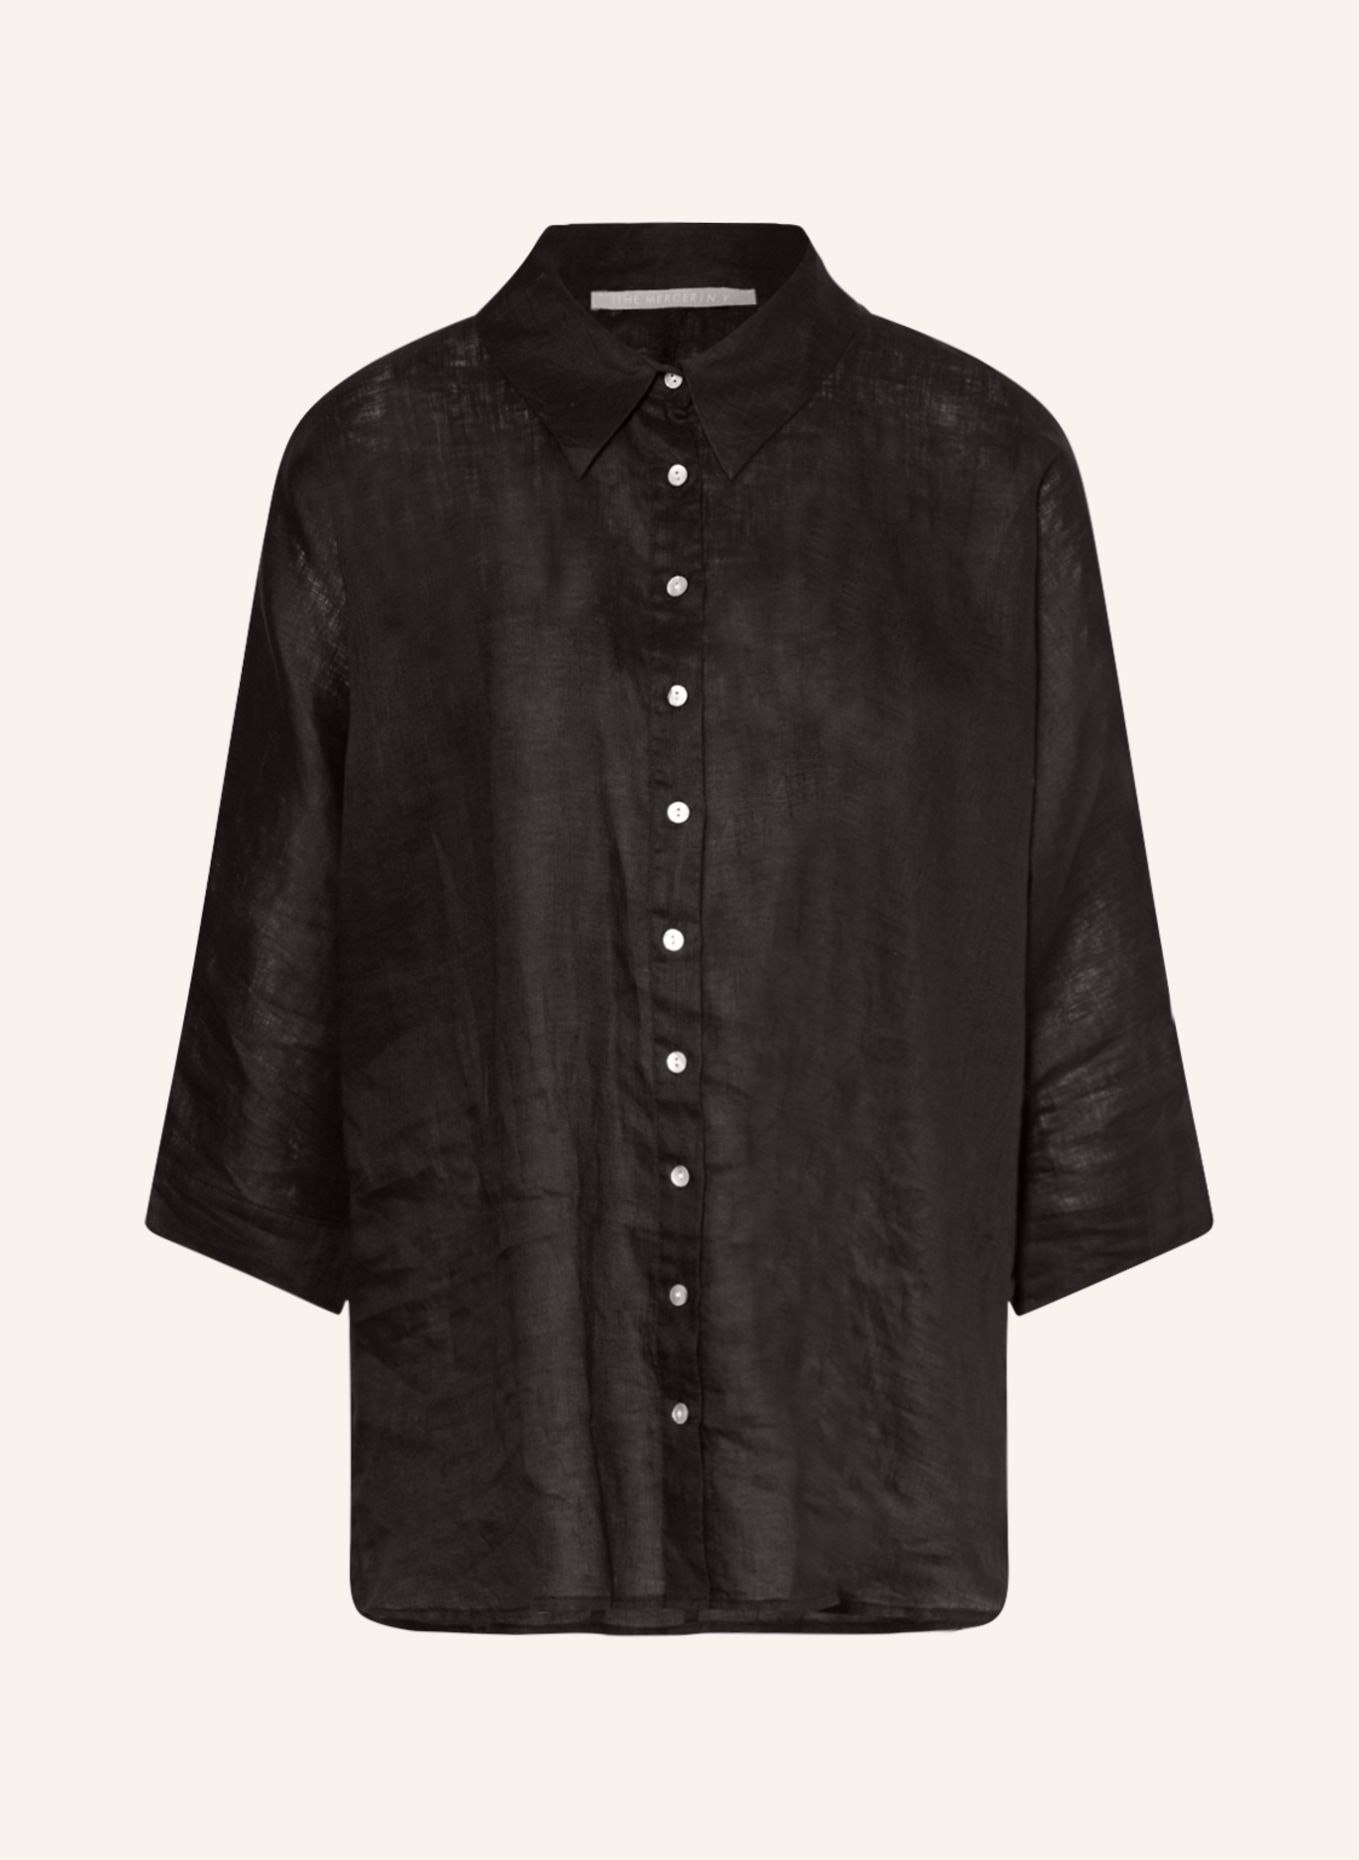 (THE MERCER) N.Y. Shirt blouse made of linen, Color: BLACK (Image 1)